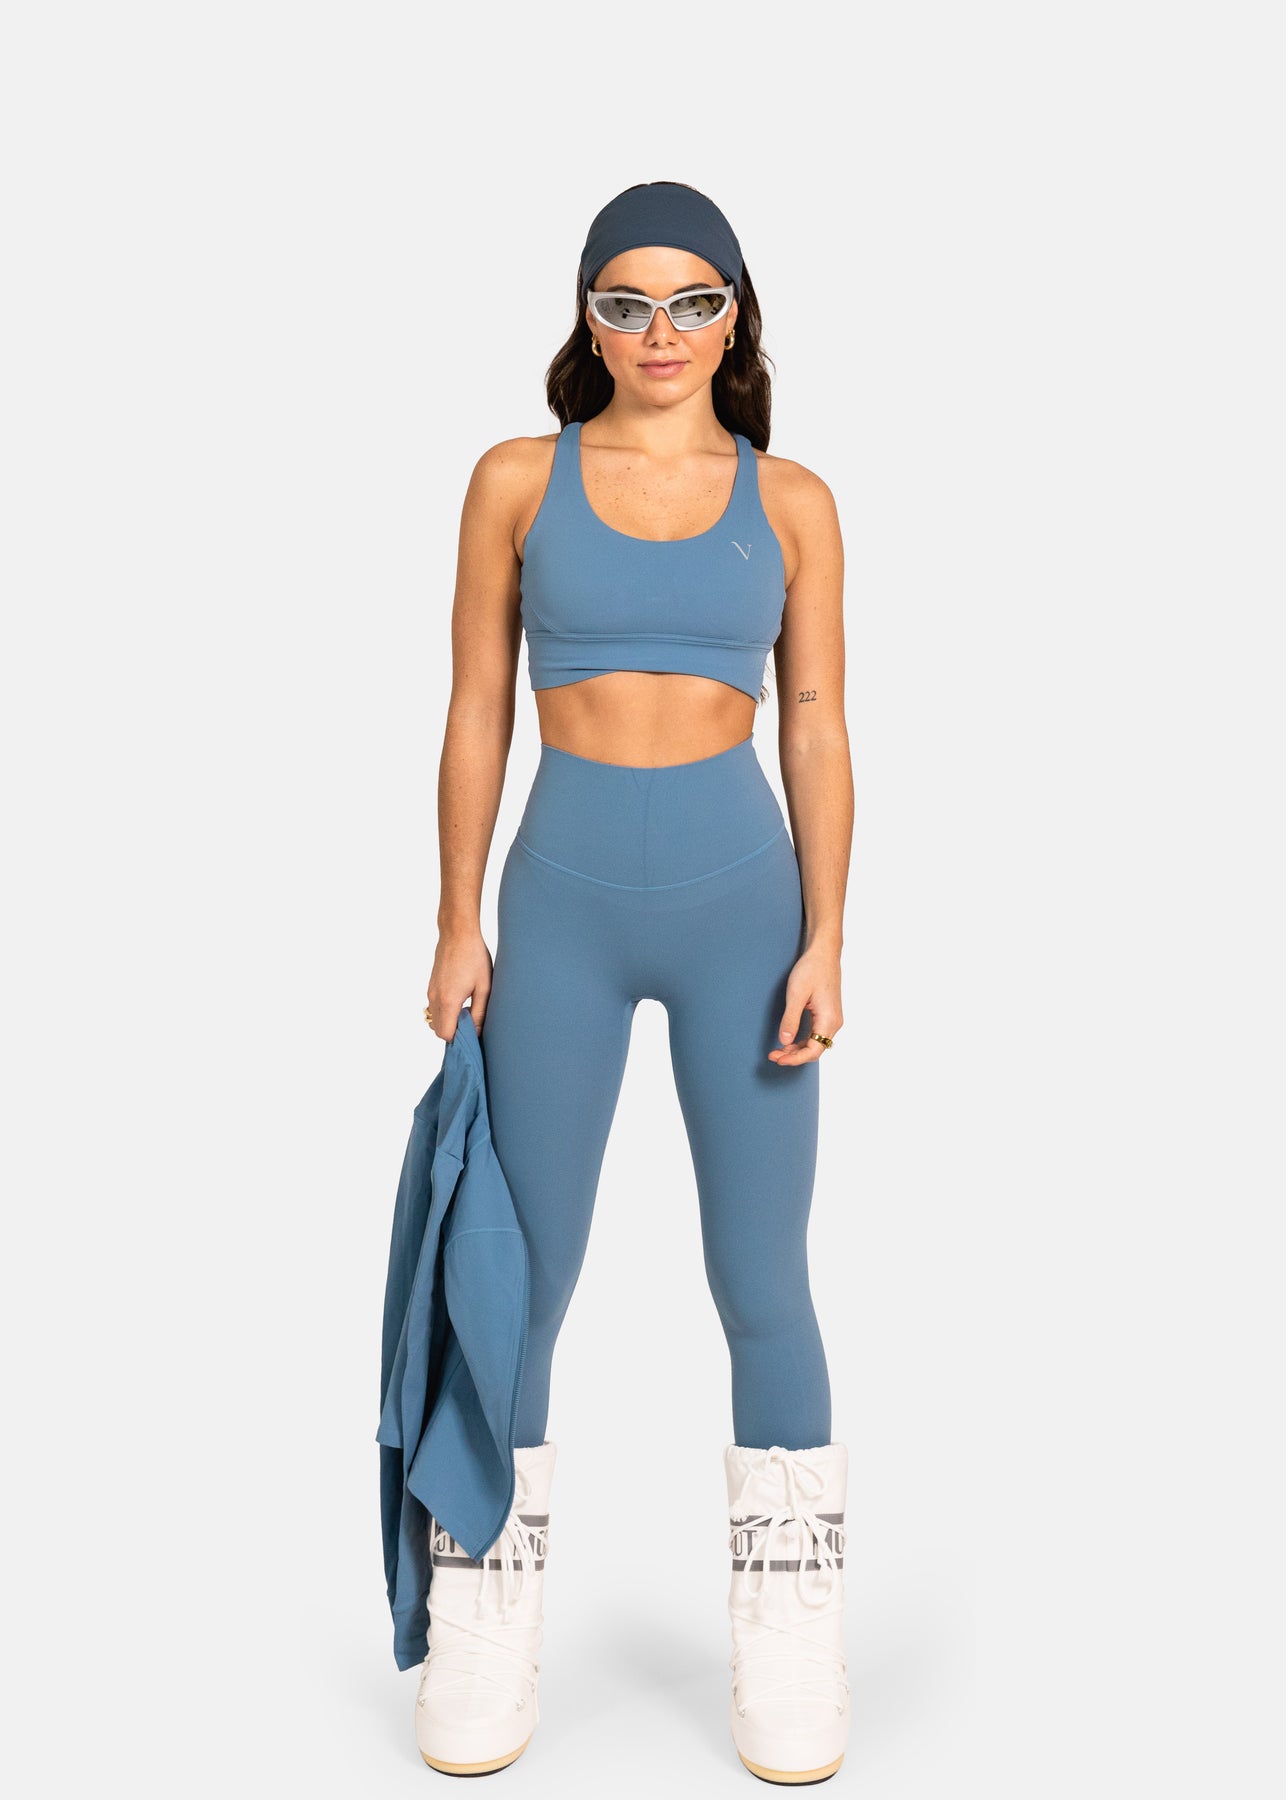 FLEXMEE Activewear: 902101 - Vitality Bra Sports Bra Sportswear - Showmee  Store